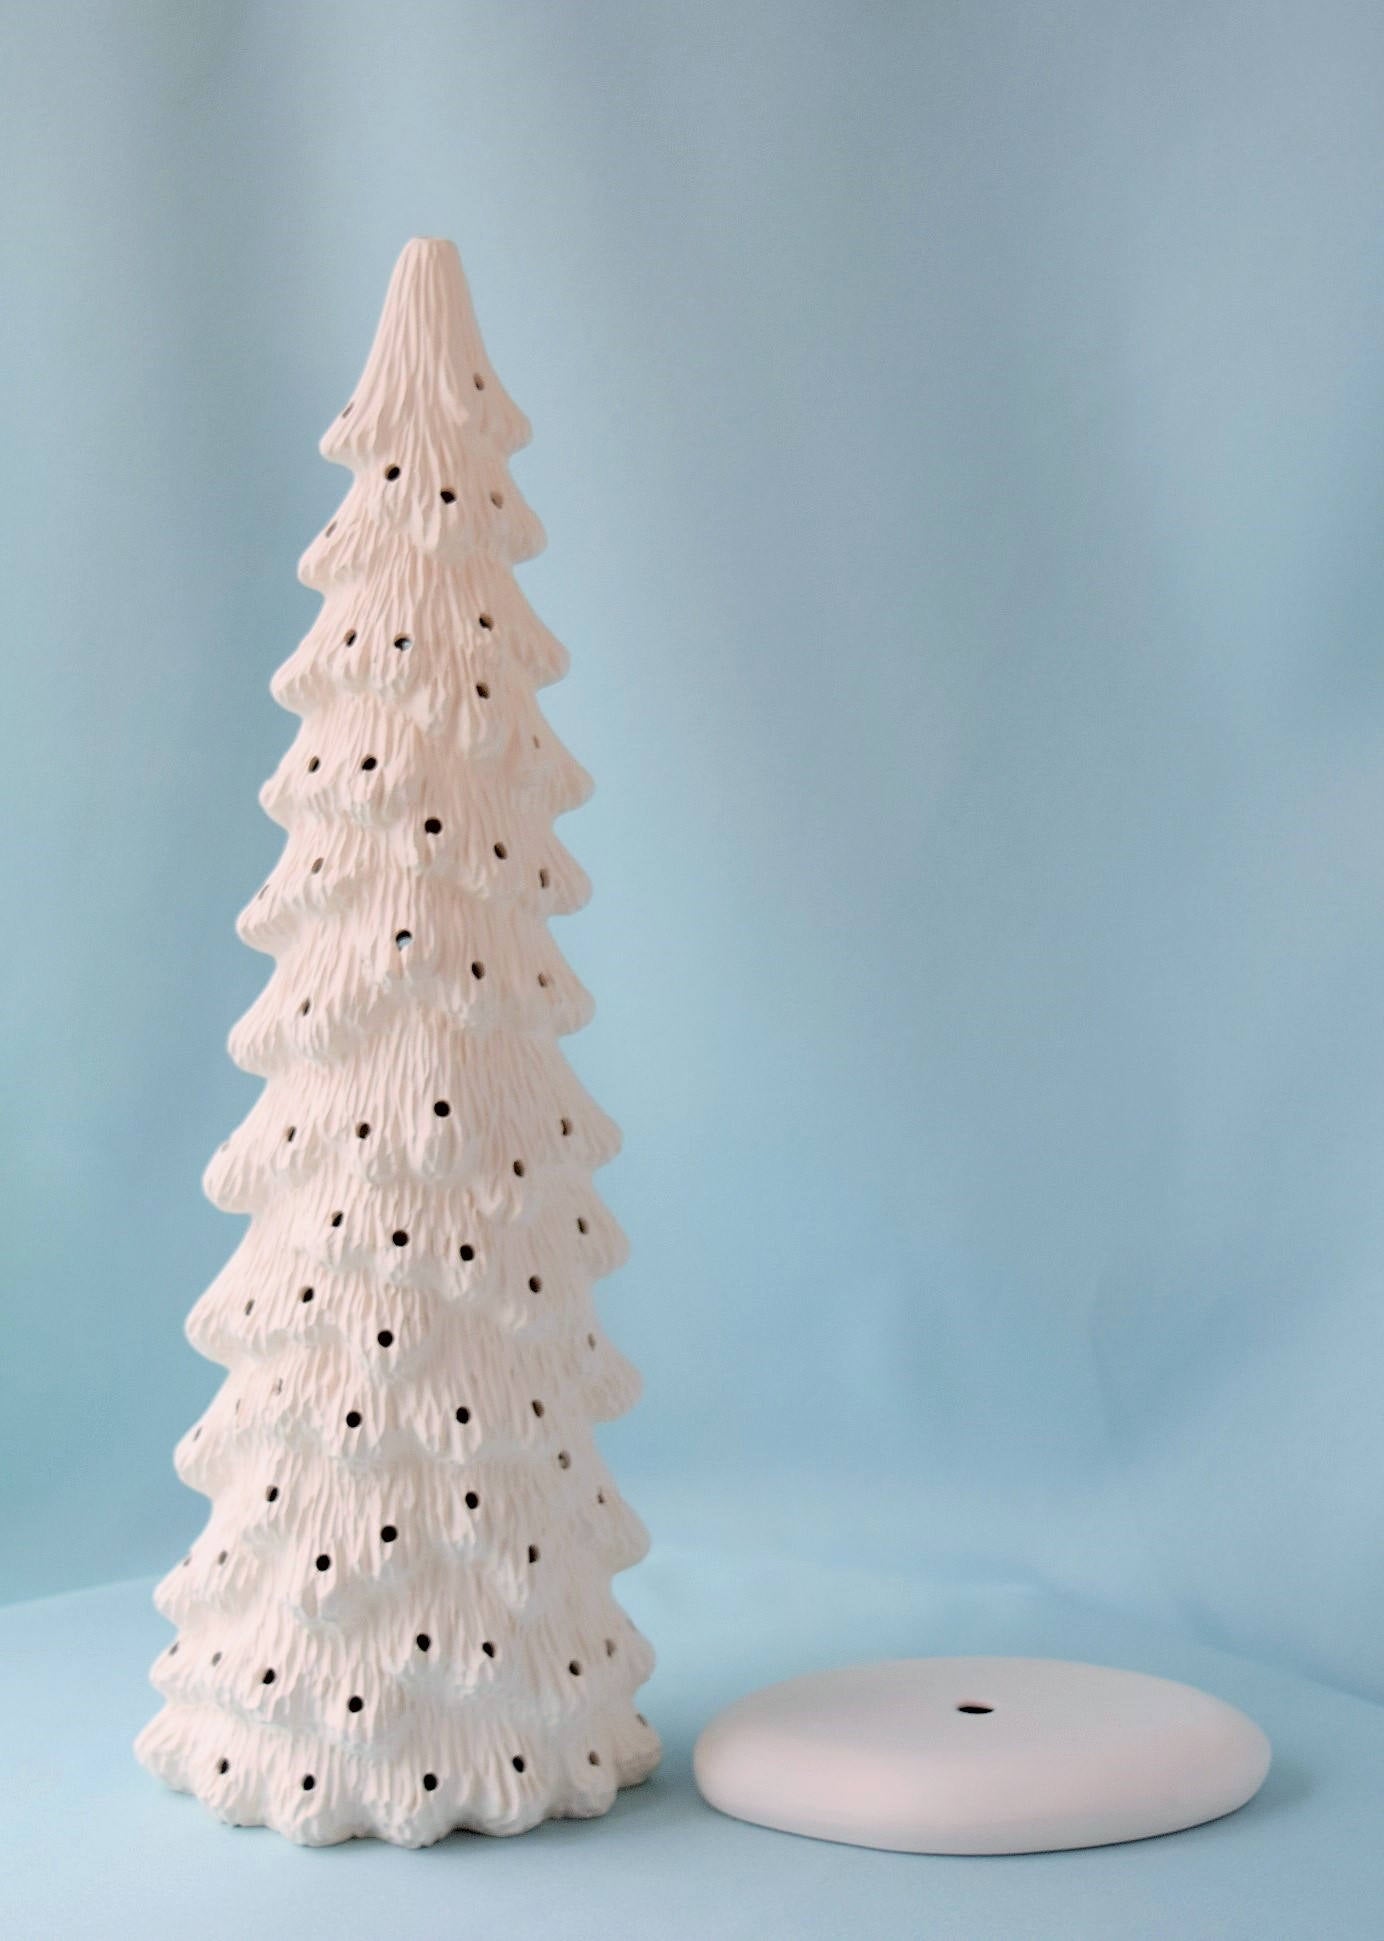 Ceramic Bisque Holiday Village Tree - 13" Tree - DIY